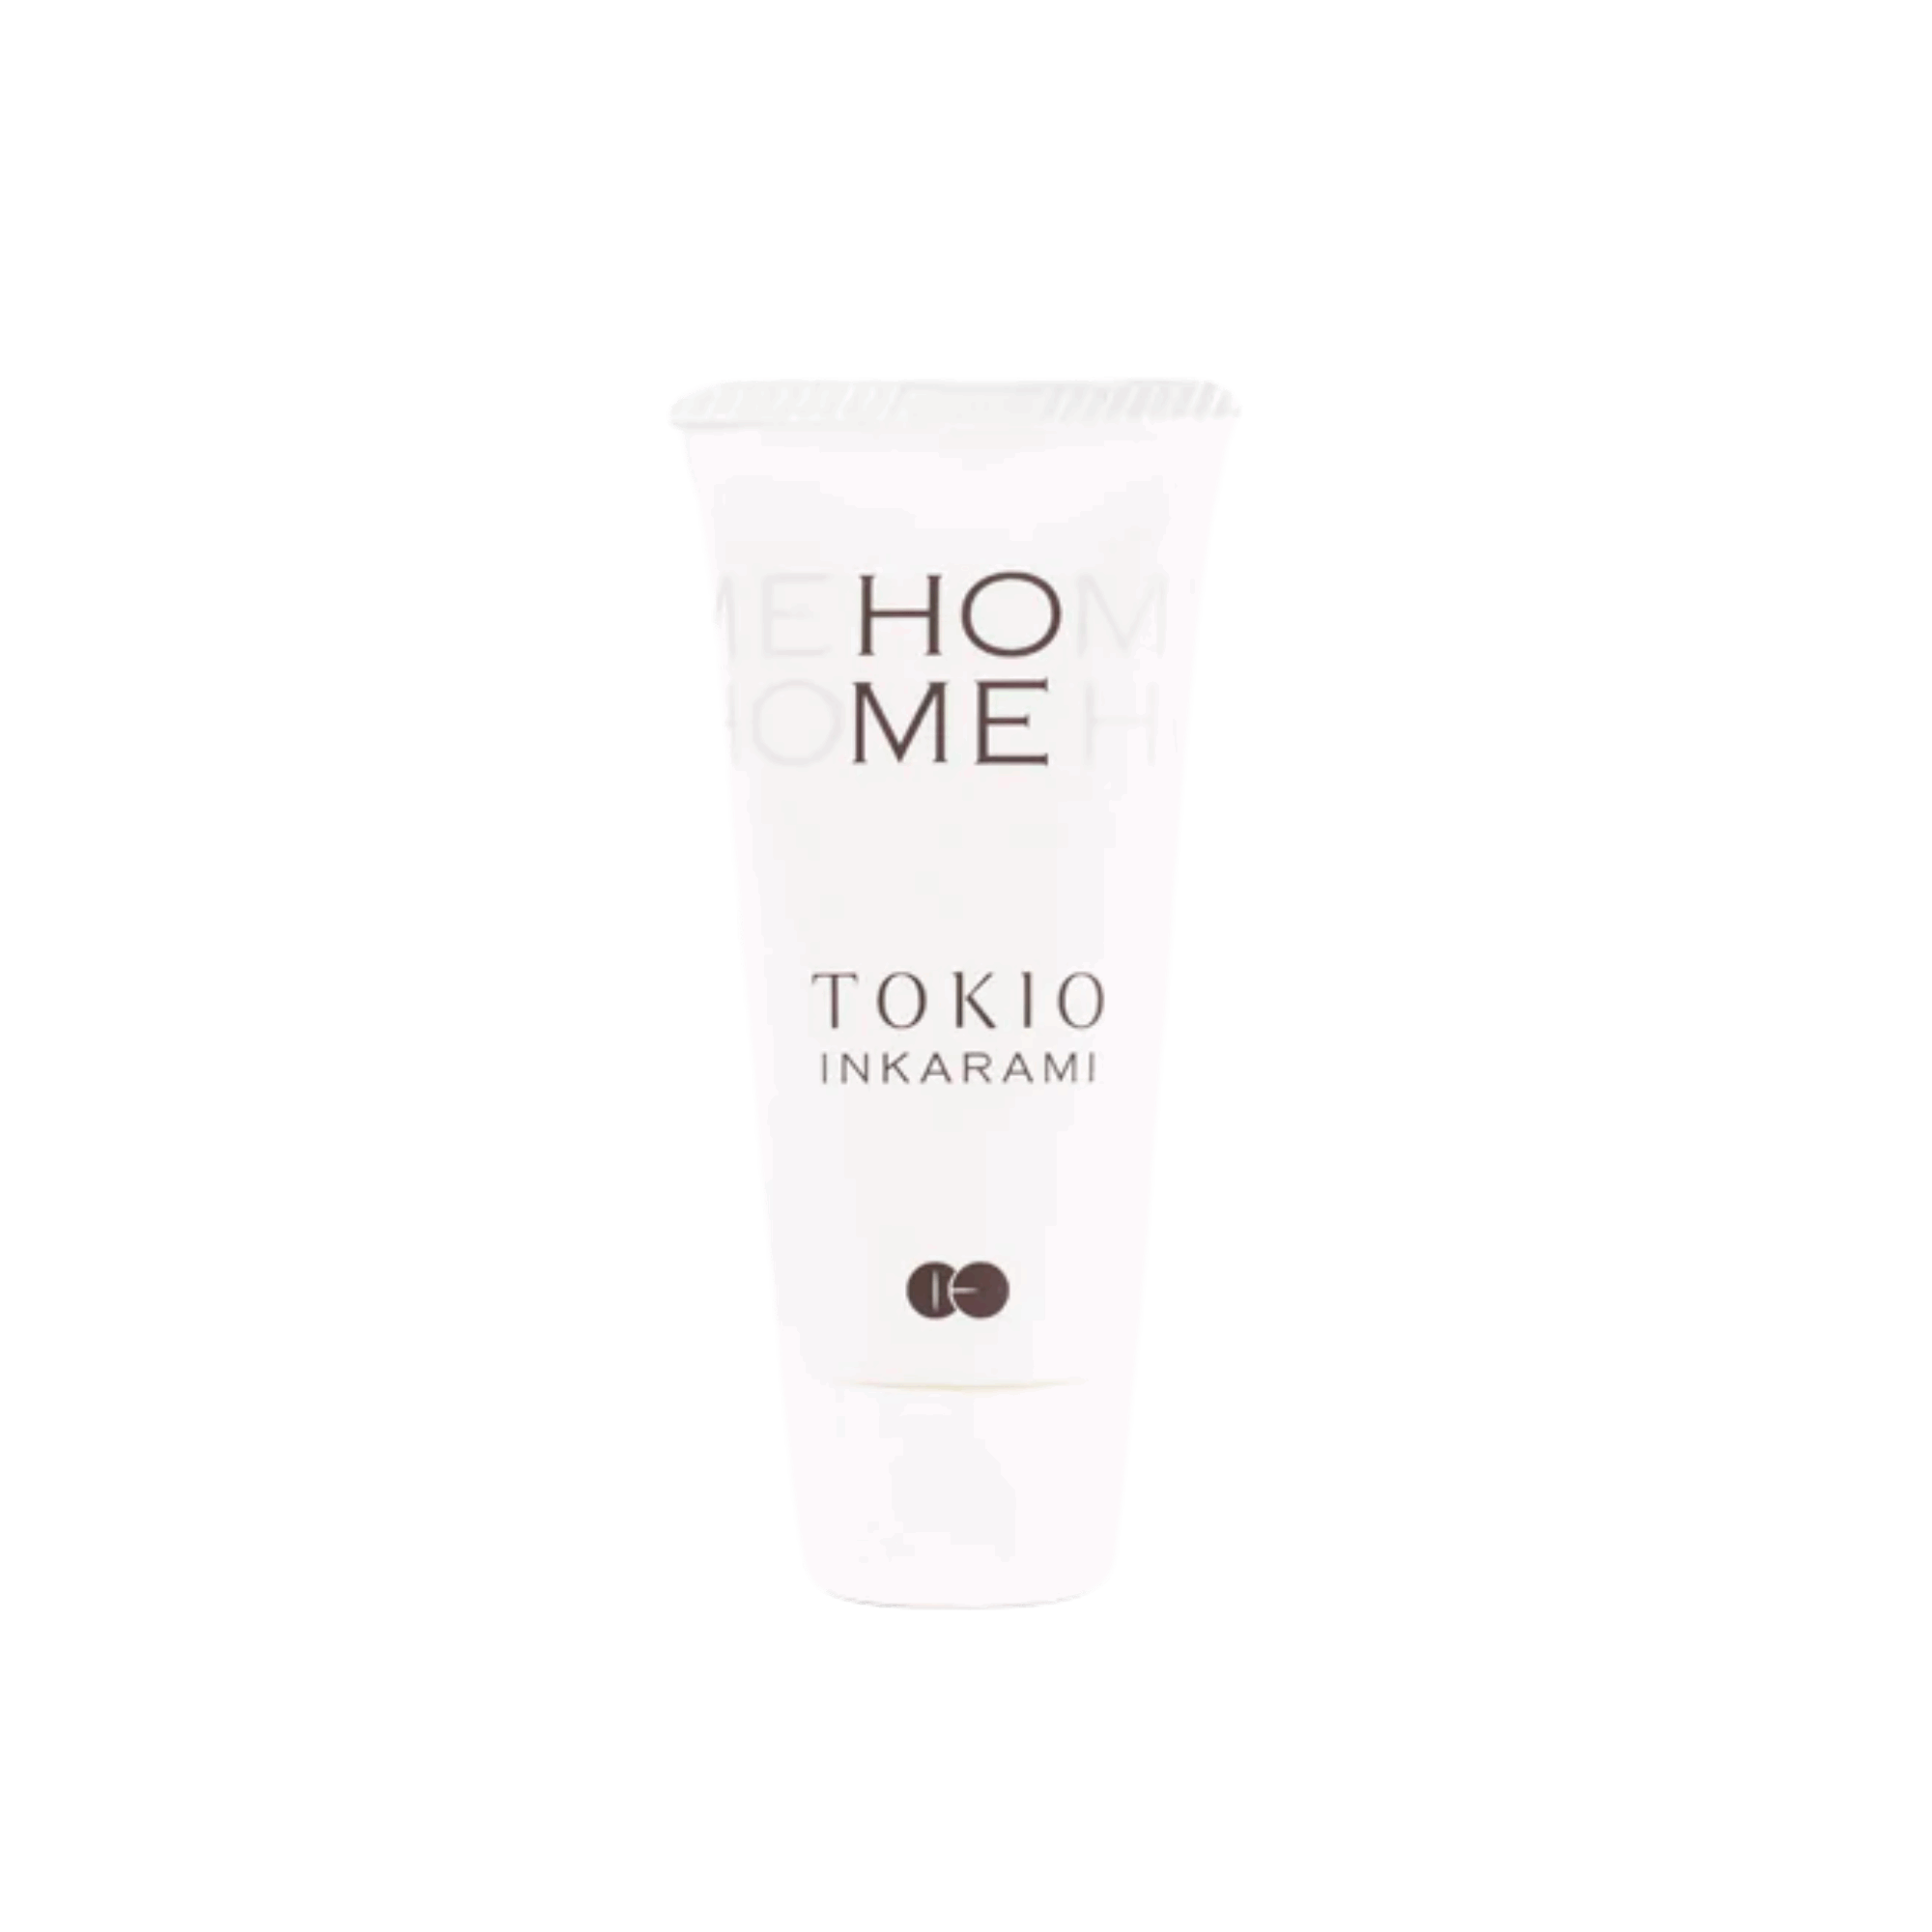 Tokio Home Mask - Tokio Home Mask - 50g